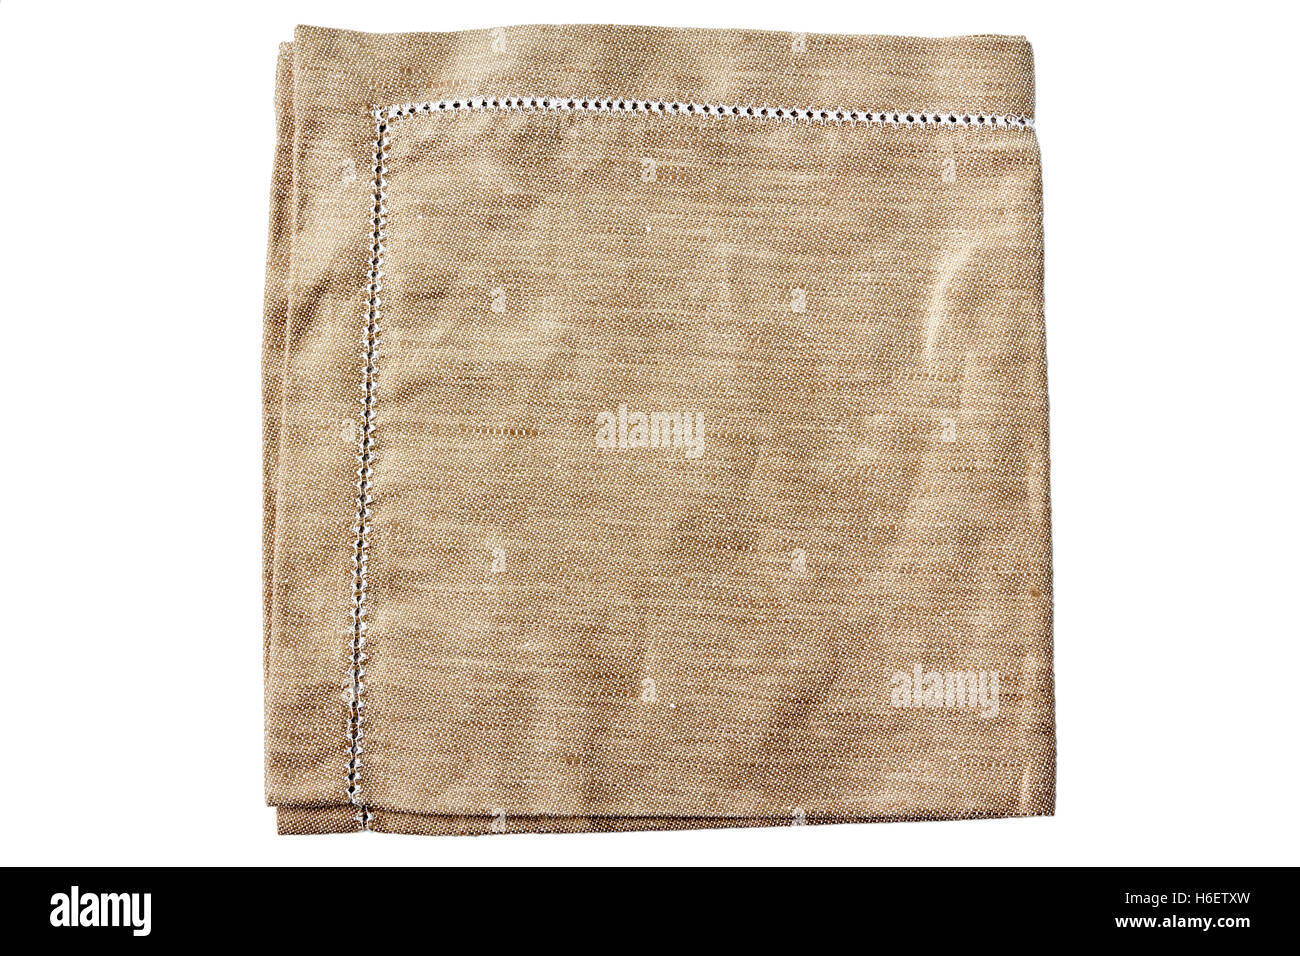 Beige fabric napkin on white Stock Photo